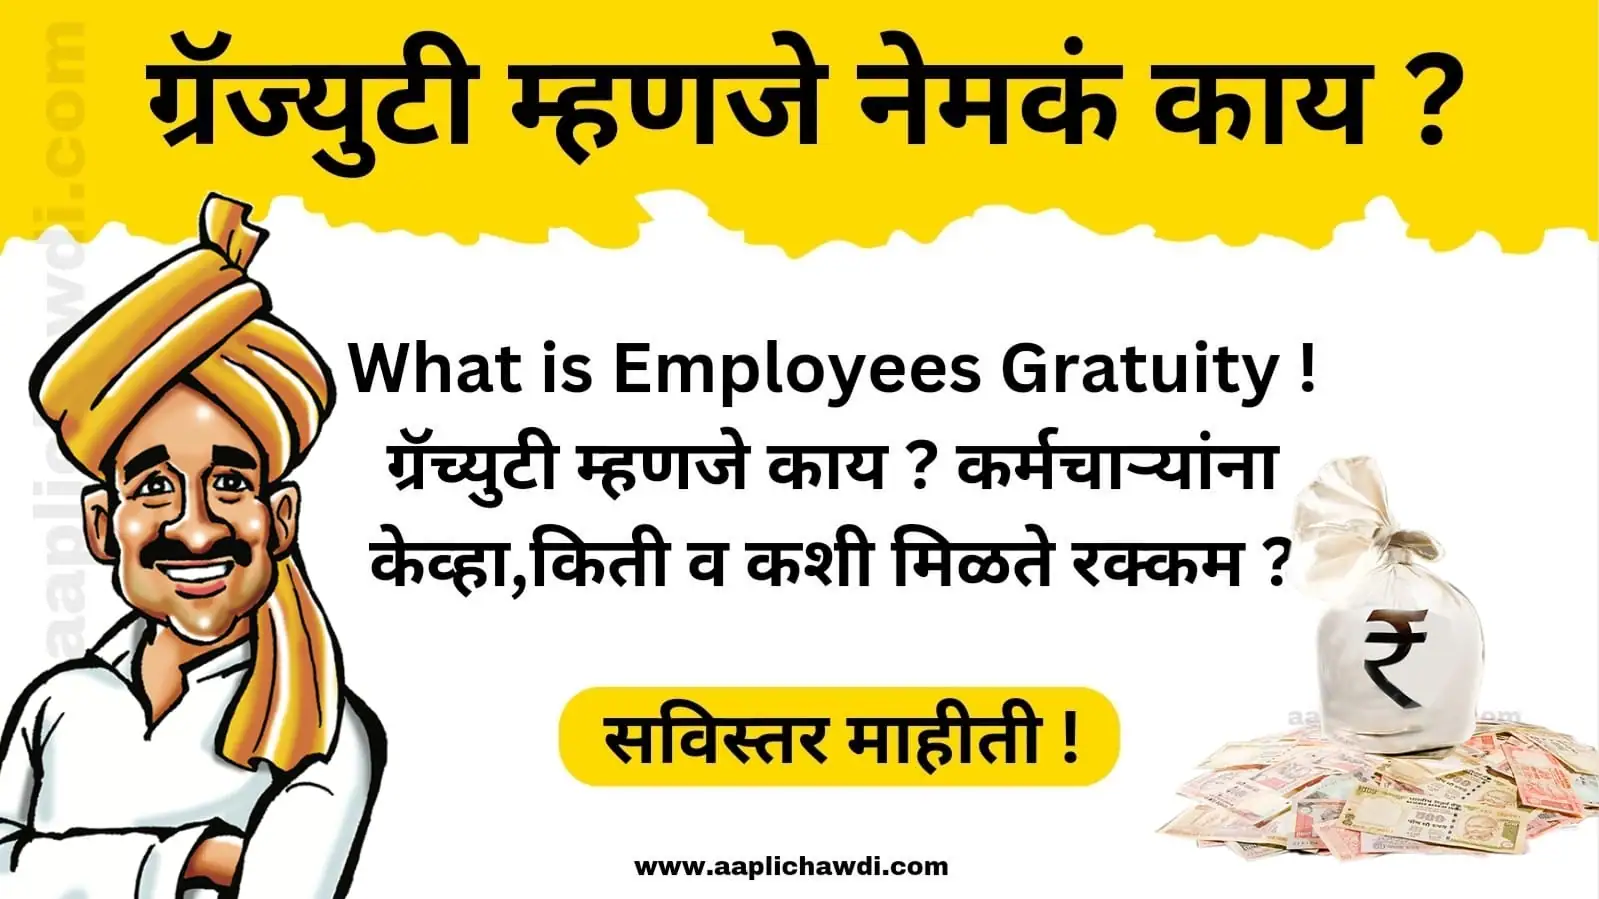 What is Employee Gratuity